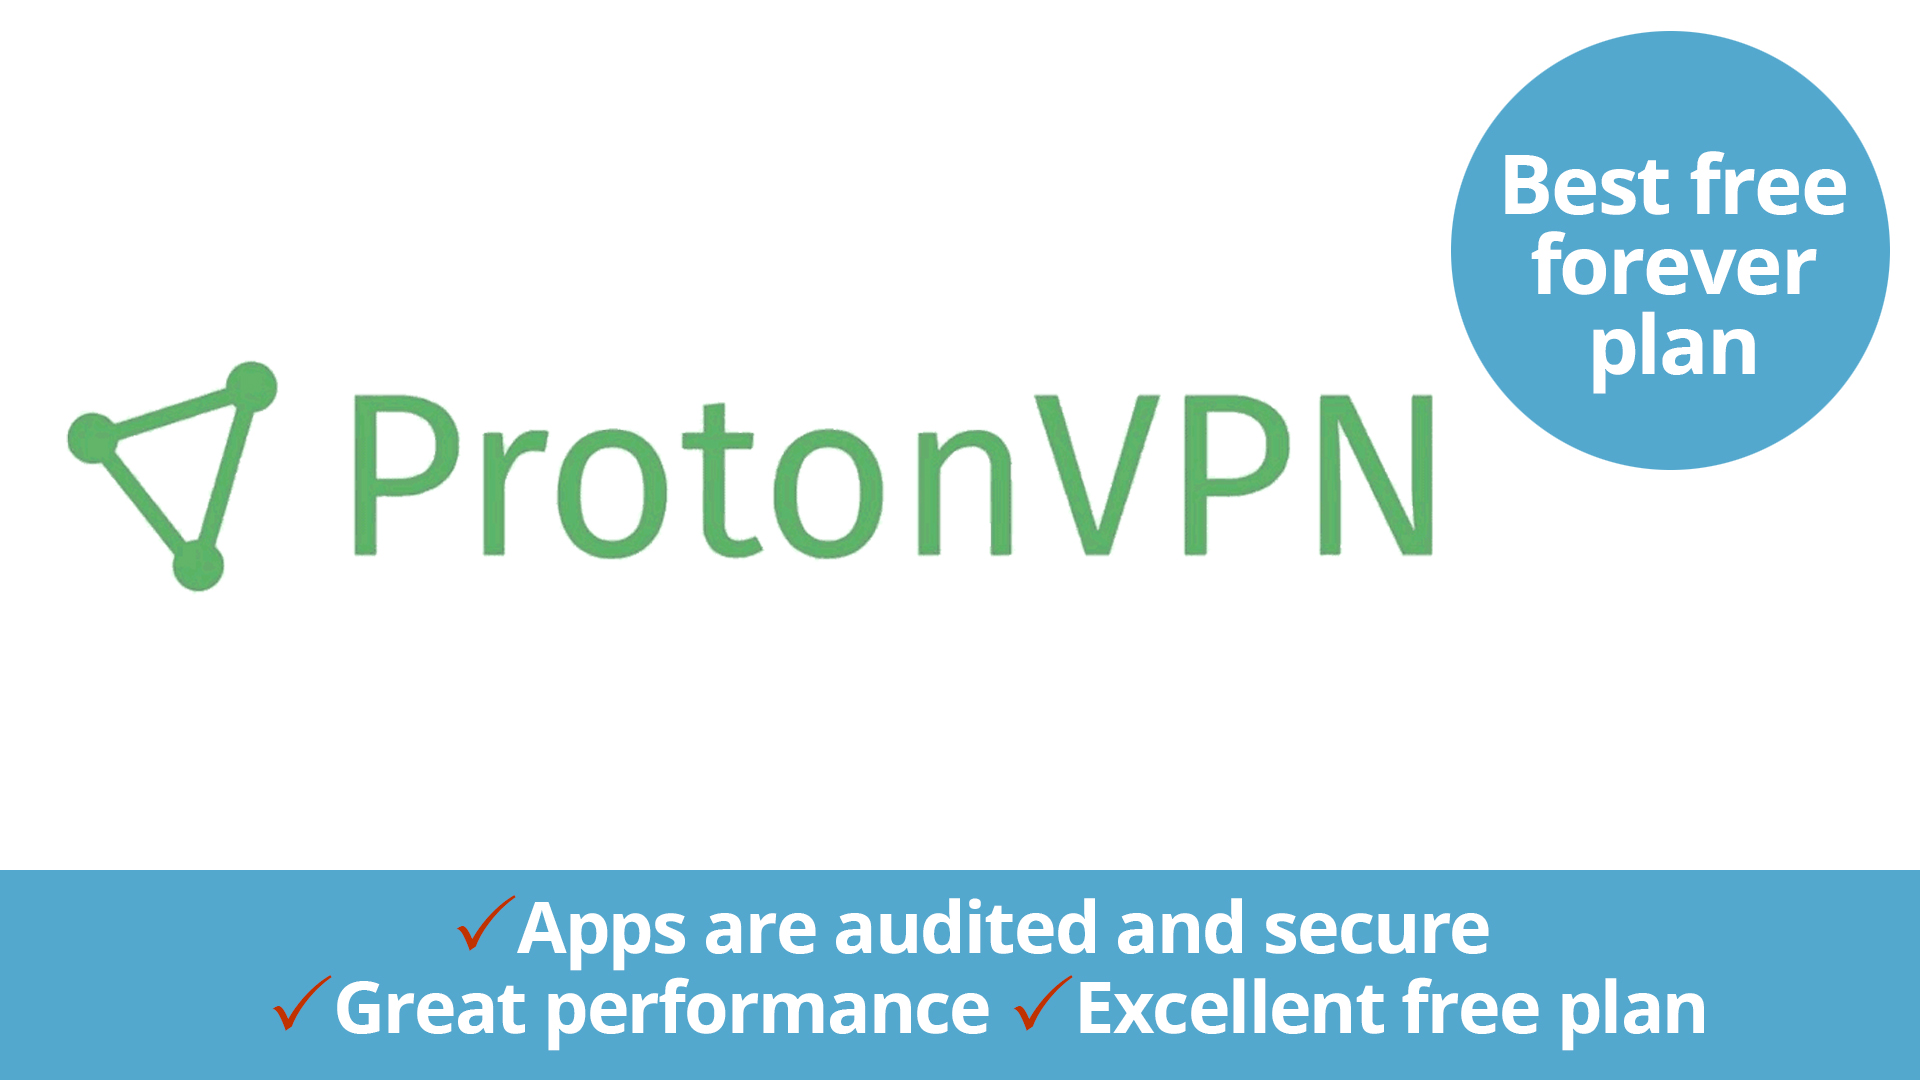 ProtonVPN logo